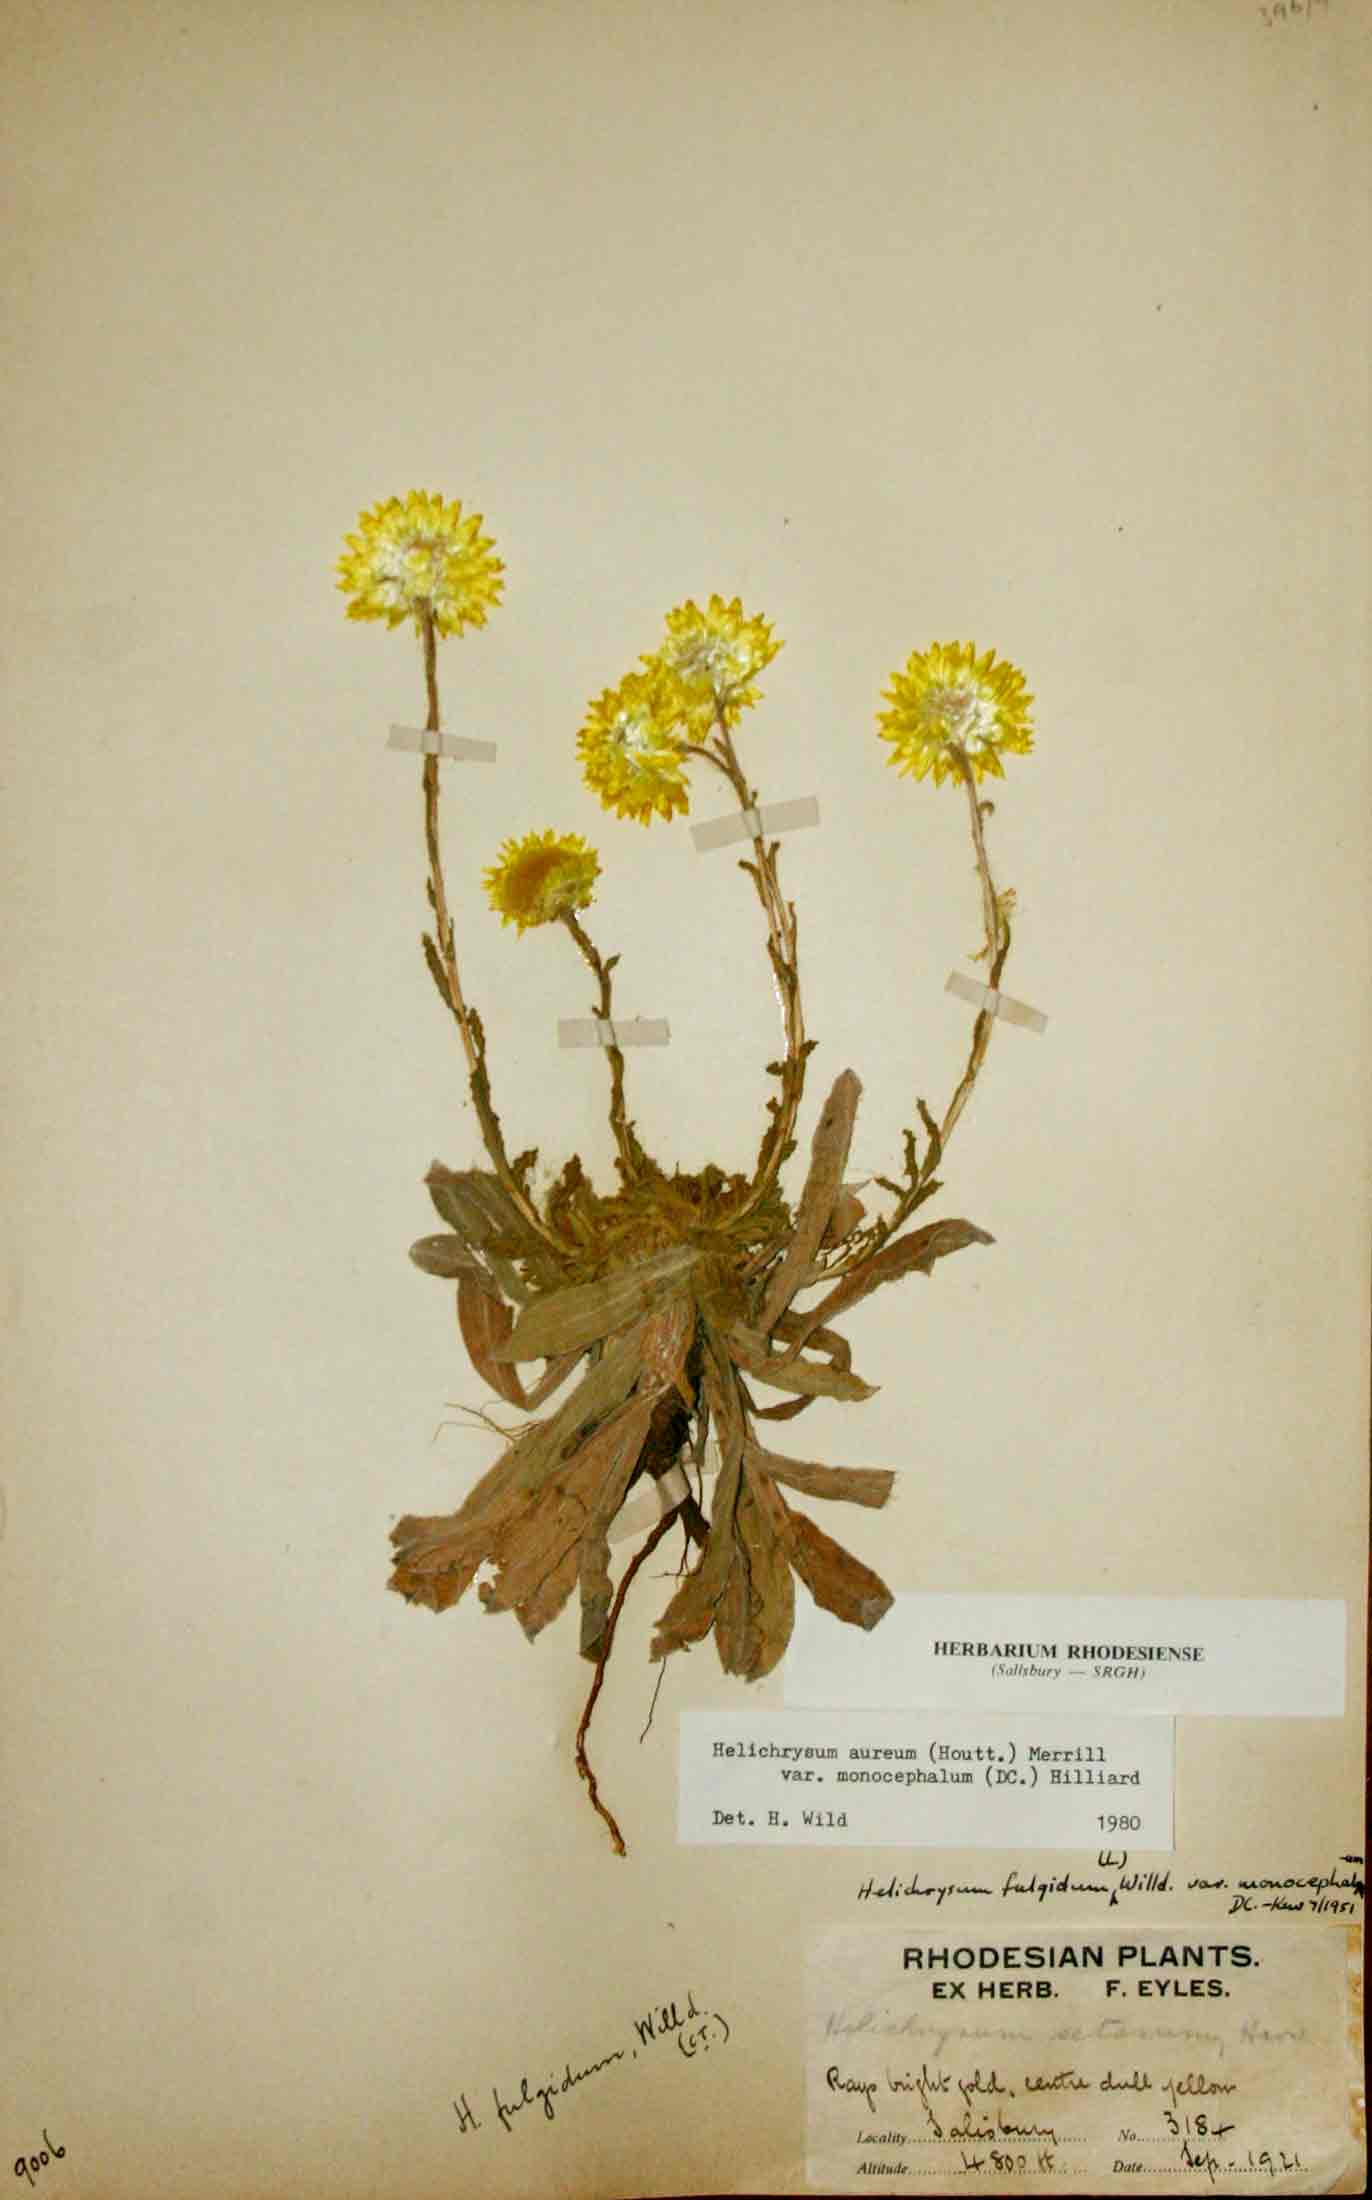 Helichrysum aureum var. monocephalum